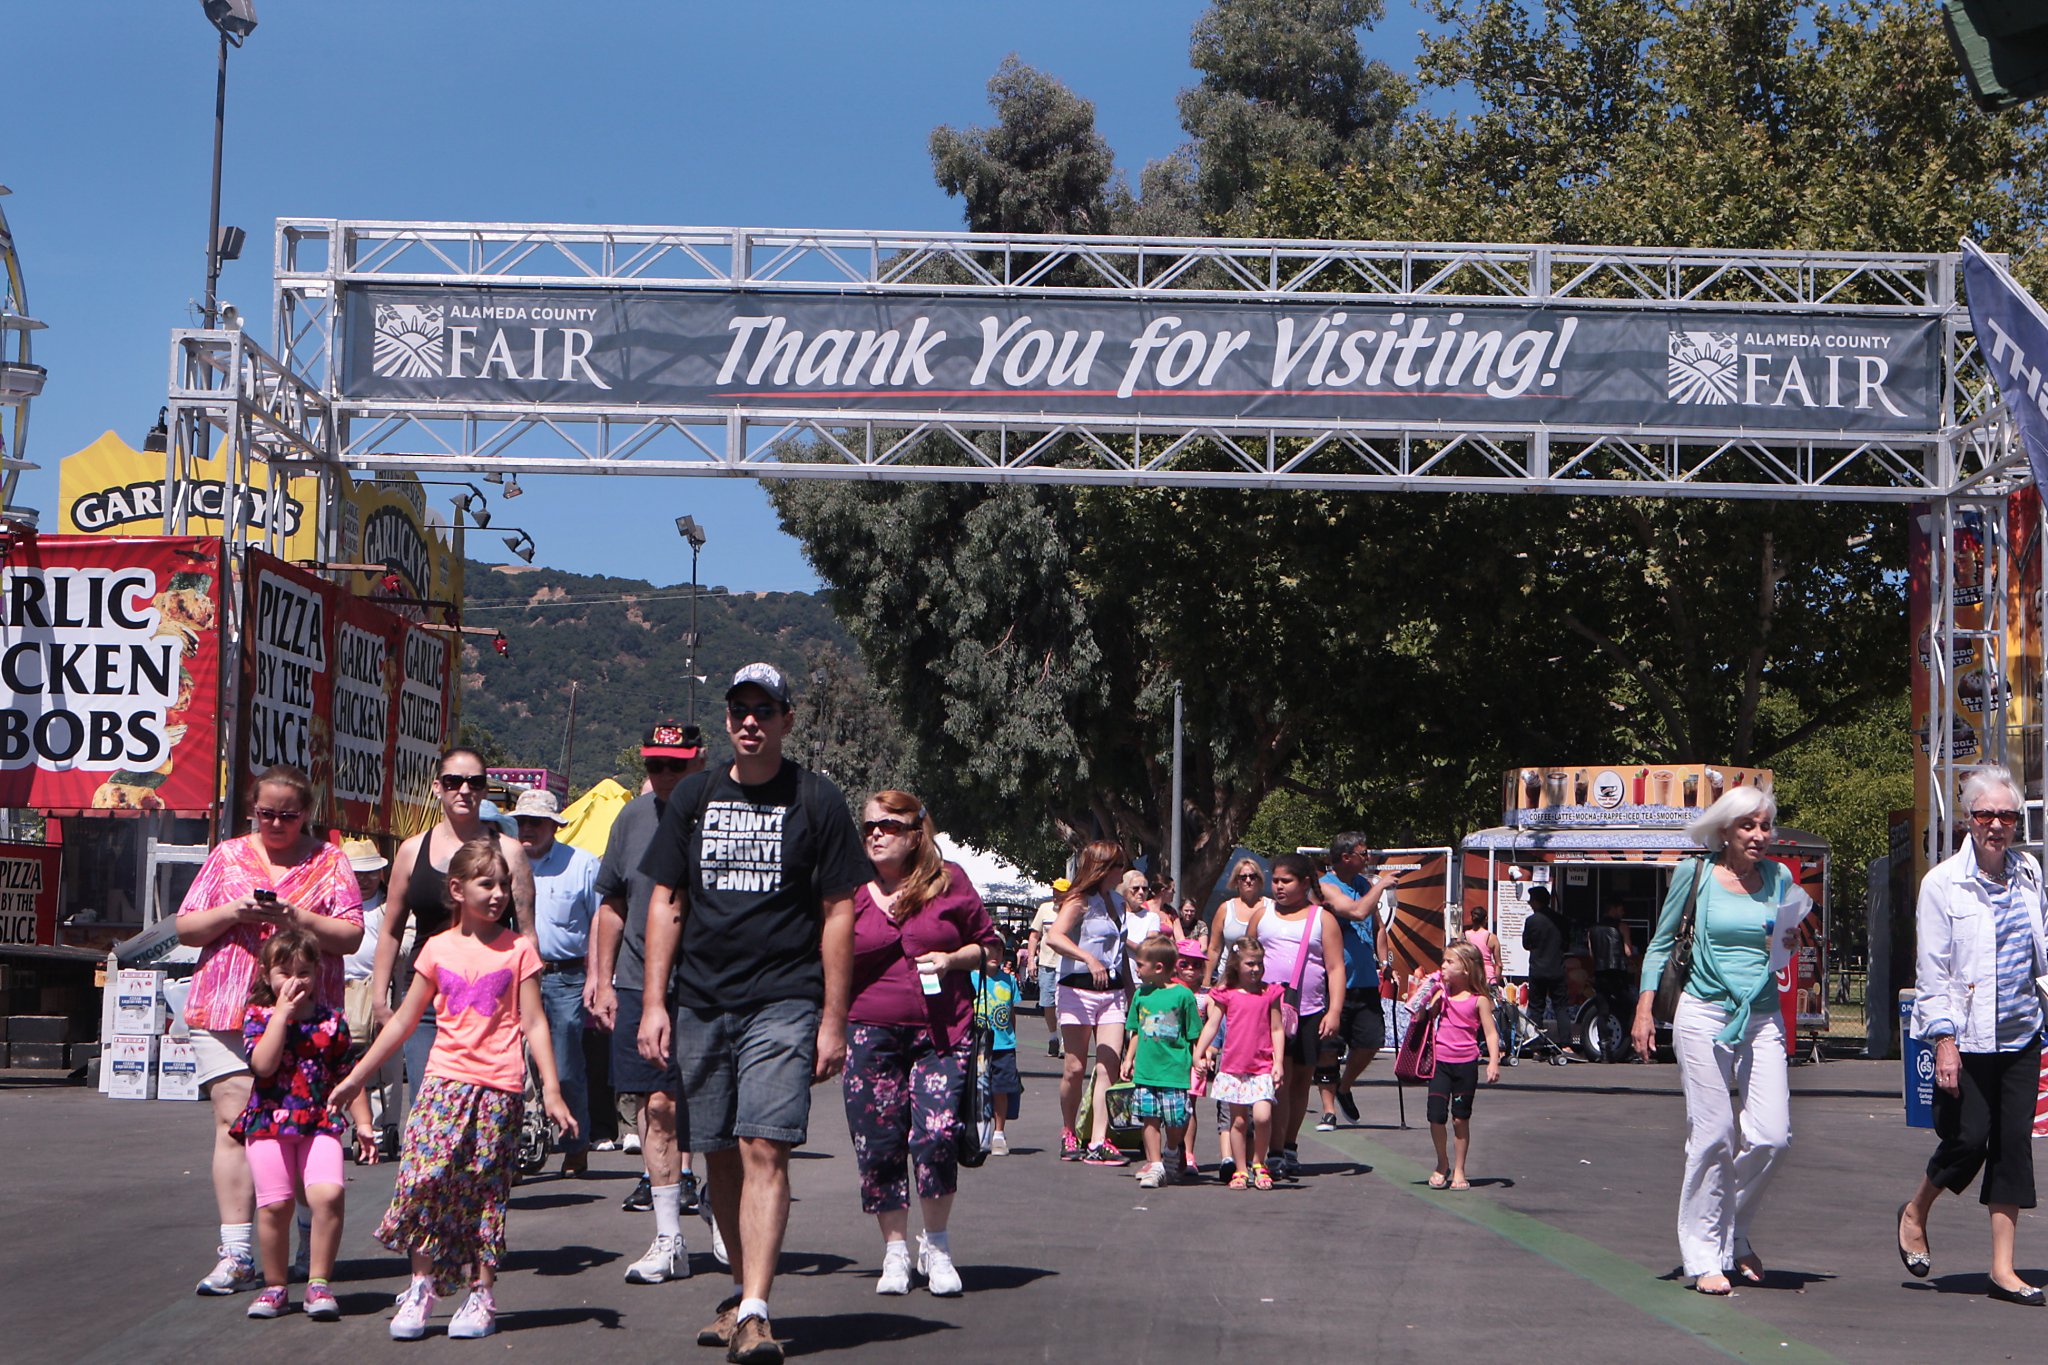 Western Weekend opens historic Alameda County Fair